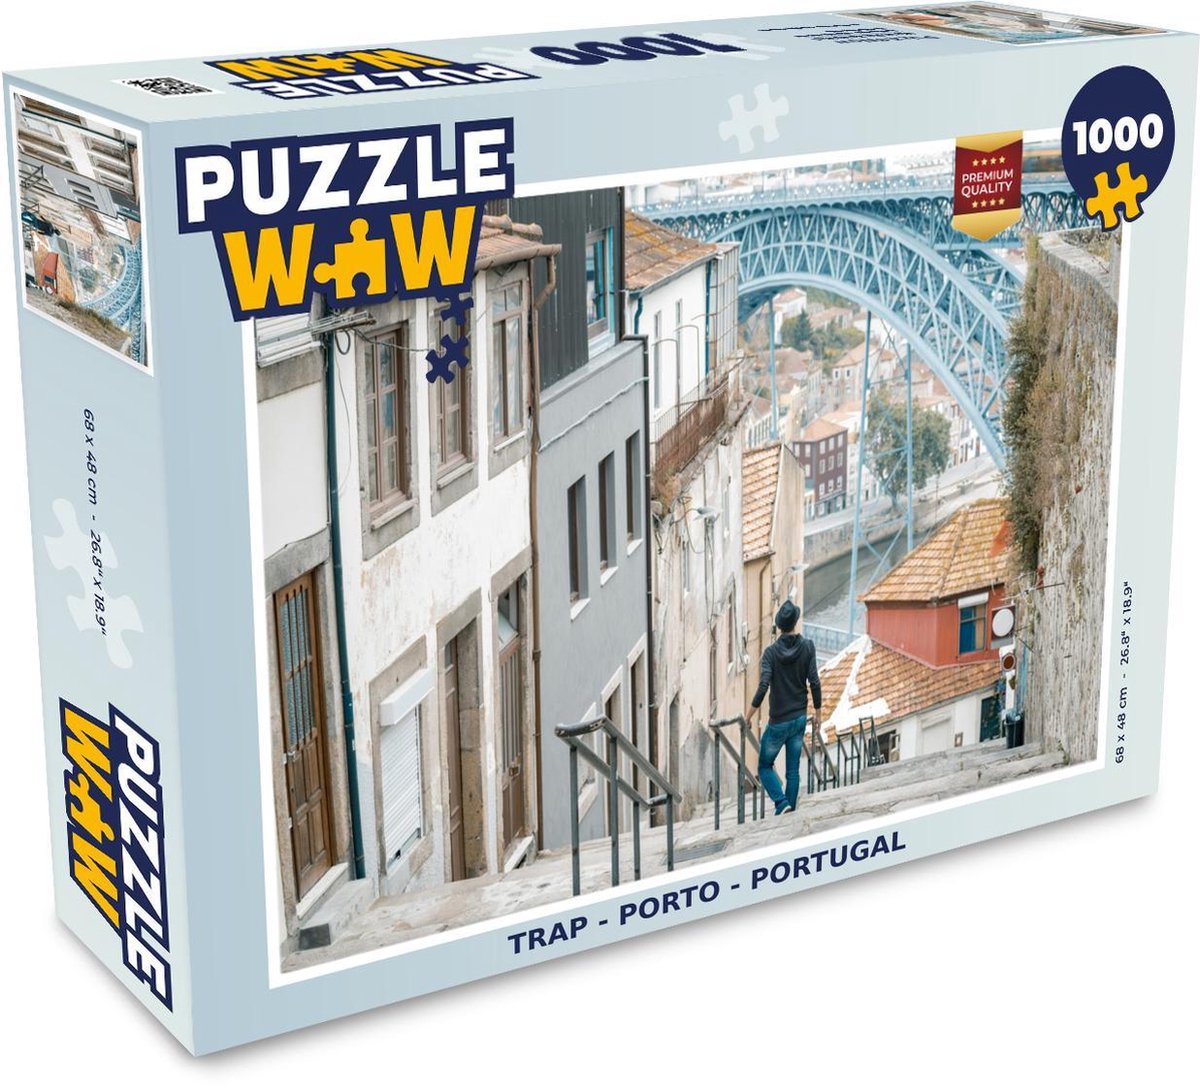 Afbeelding van product PuzzleWow  Puzzel Trap - Porto - Portugal - Legpuzzel - Puzzel 1000 stukjes volwassenen